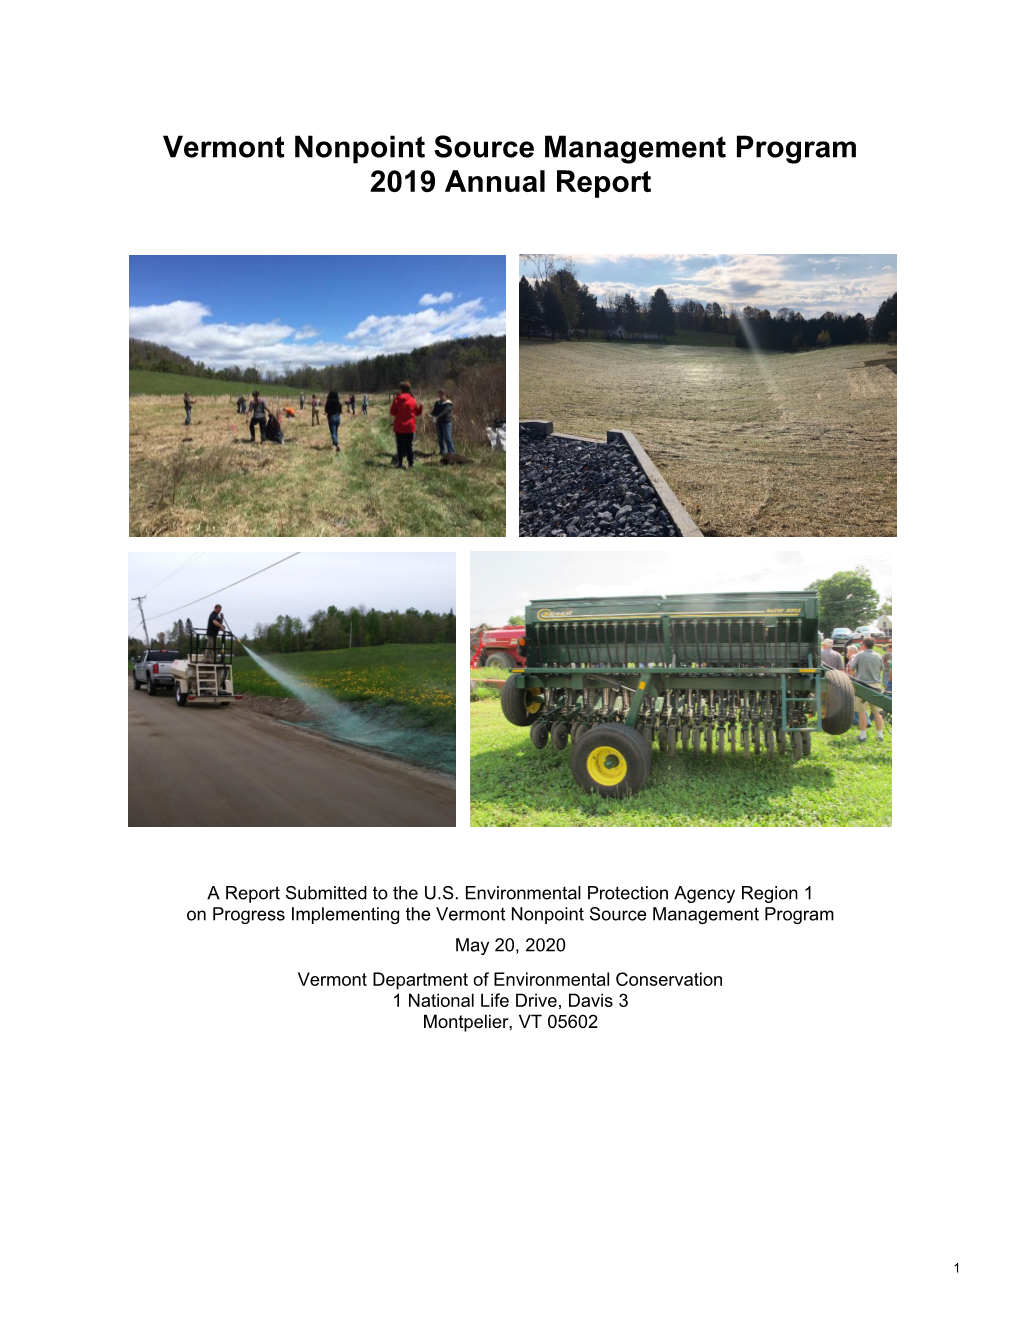 Vermont Nonpoint Source Management Program FFY 2019